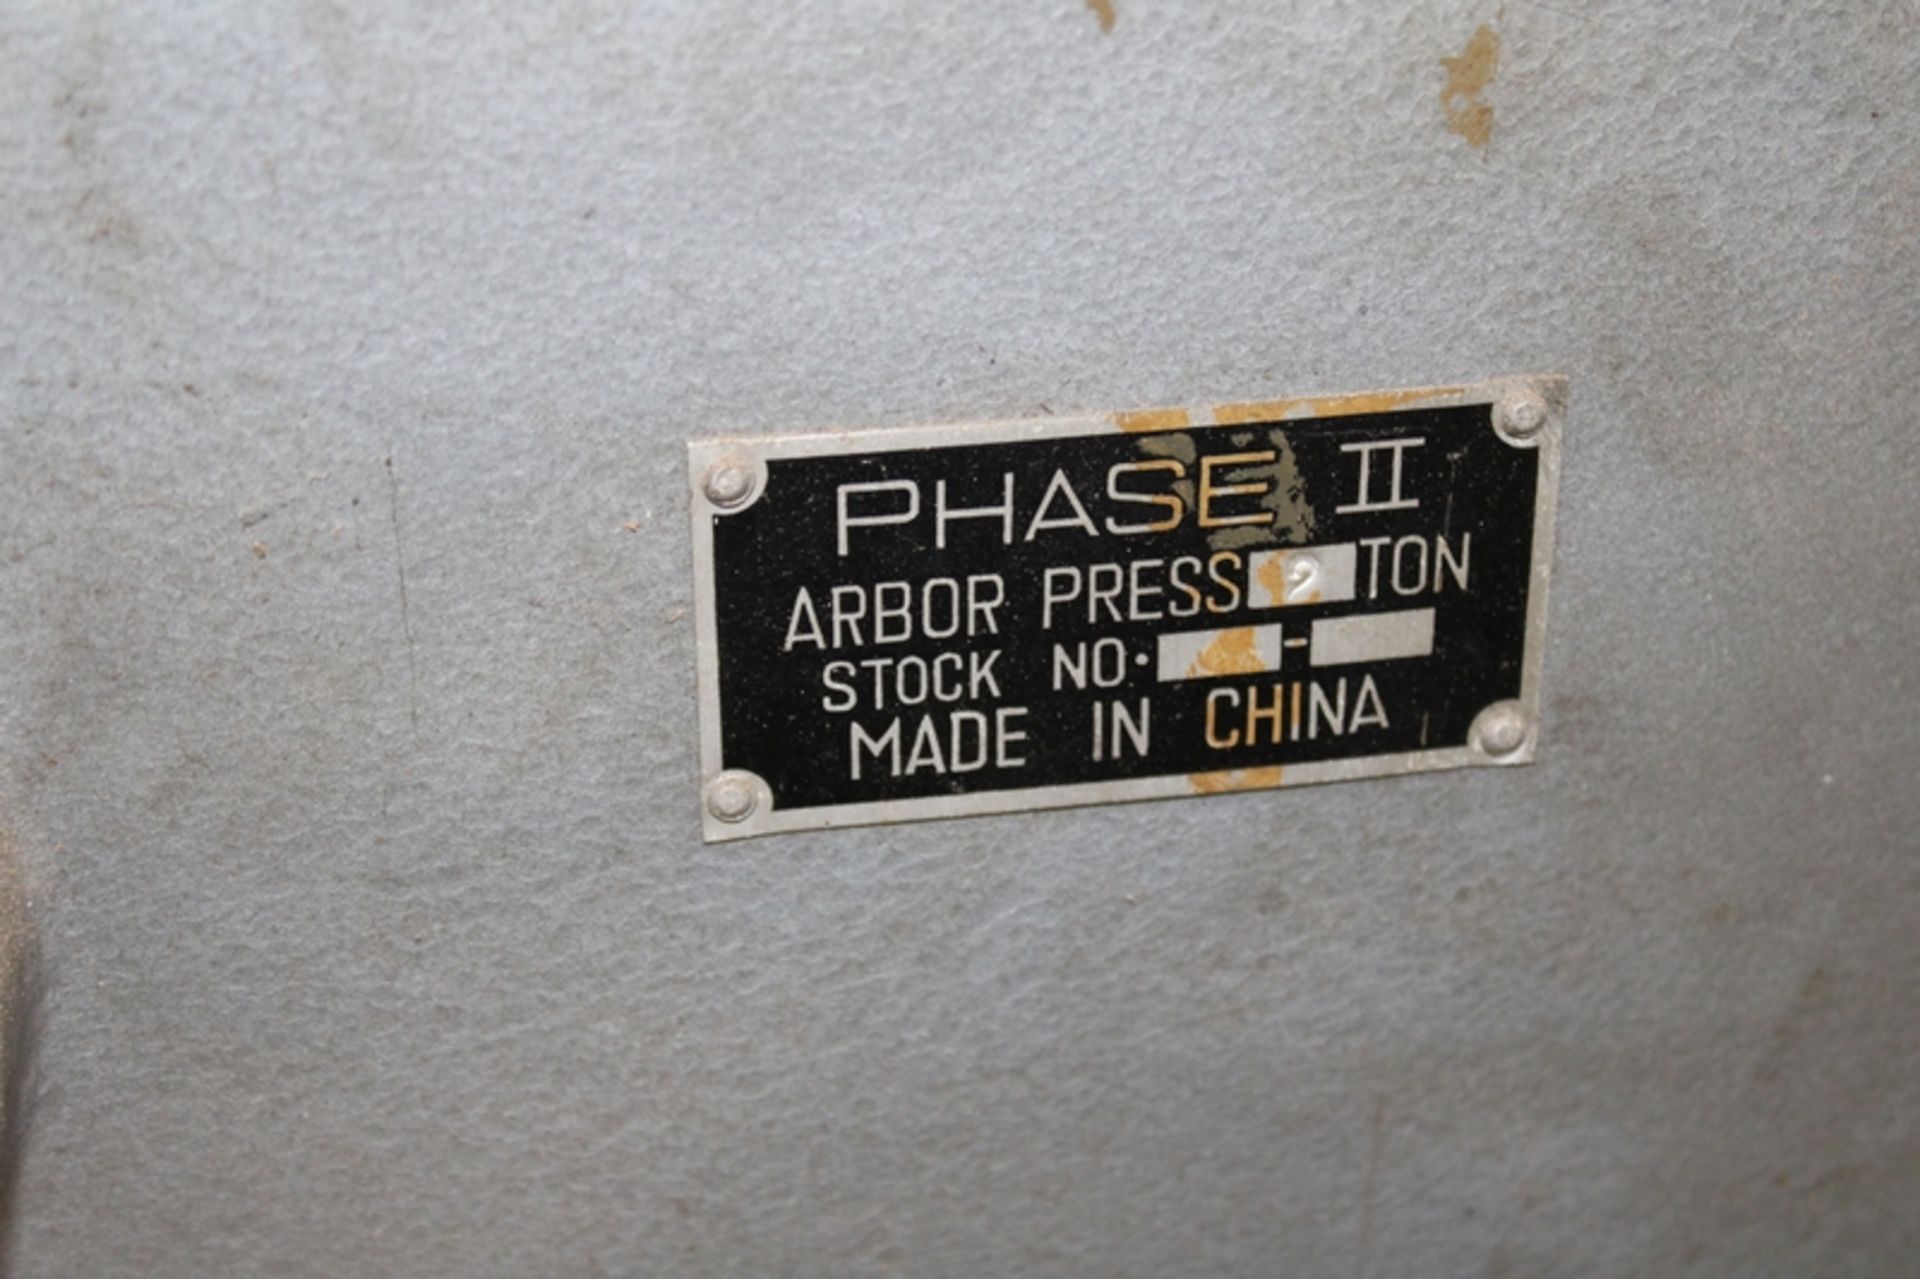 PHASE II 2-TON BENCH TOP ARBOR PRESS - Image 2 of 2